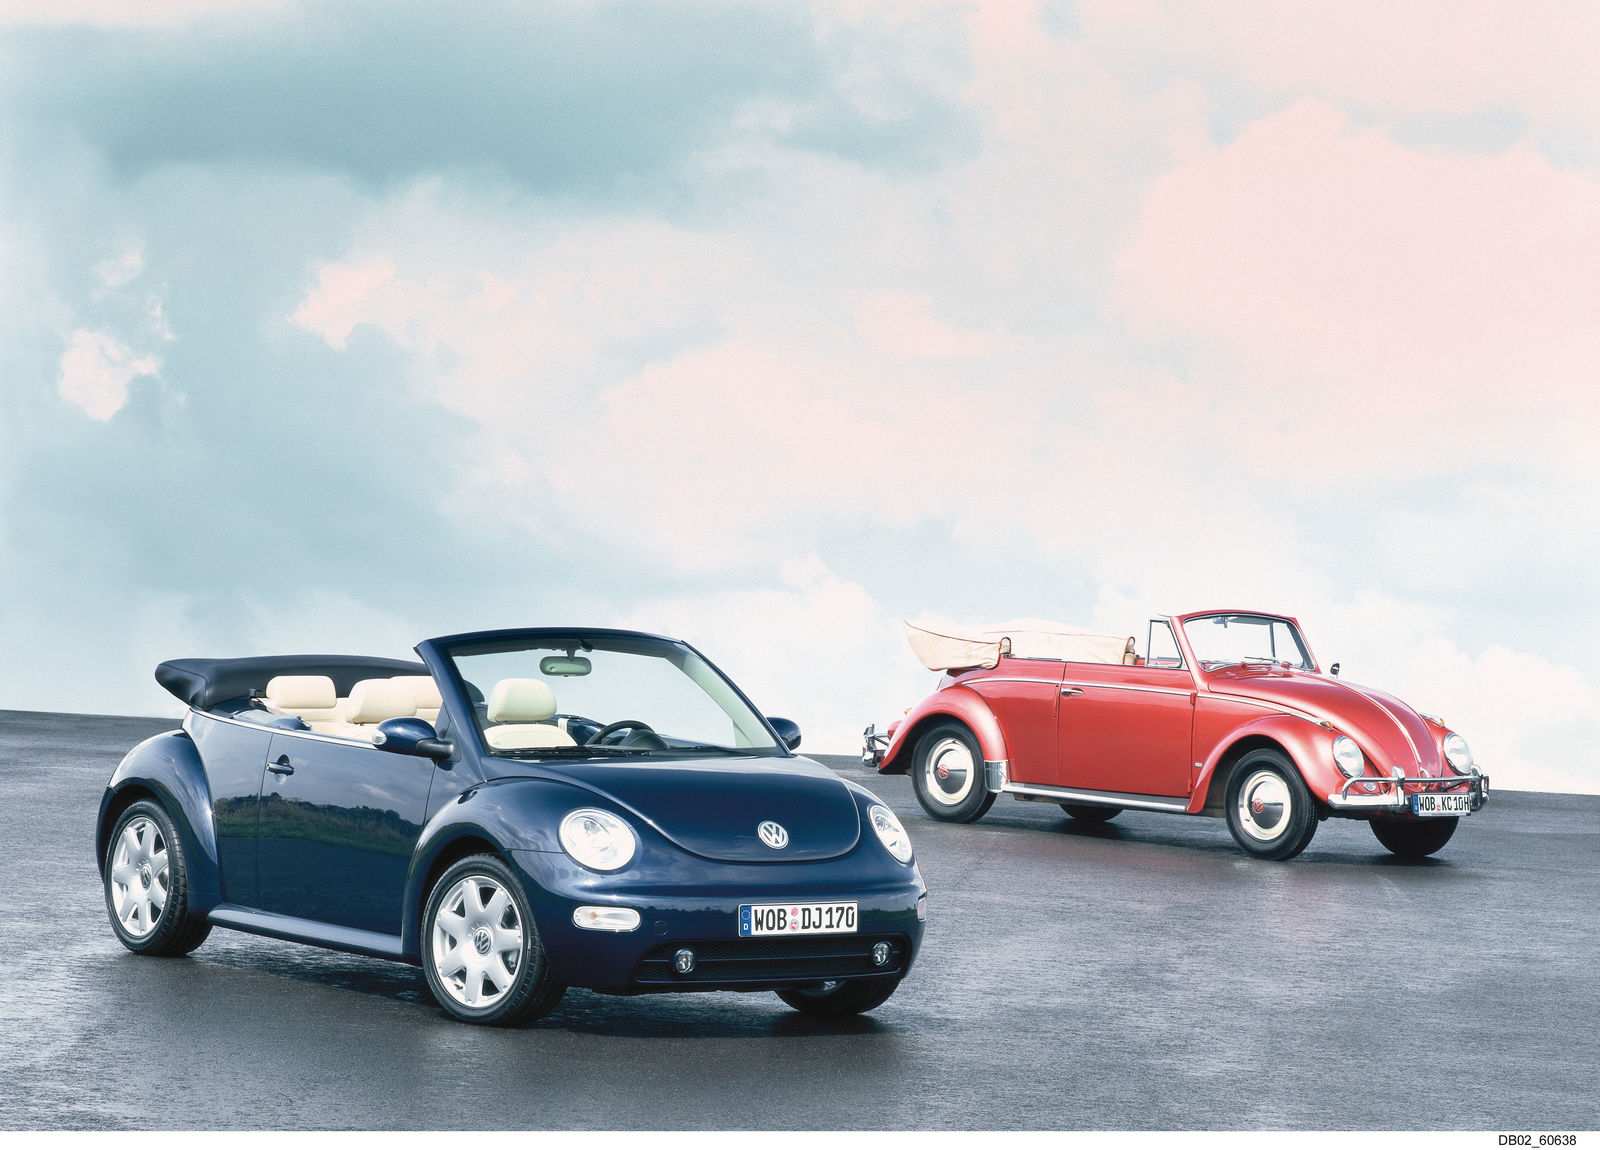 Exterieur Standards New Beetle Cabriolet und VW 1200 Cabriolet